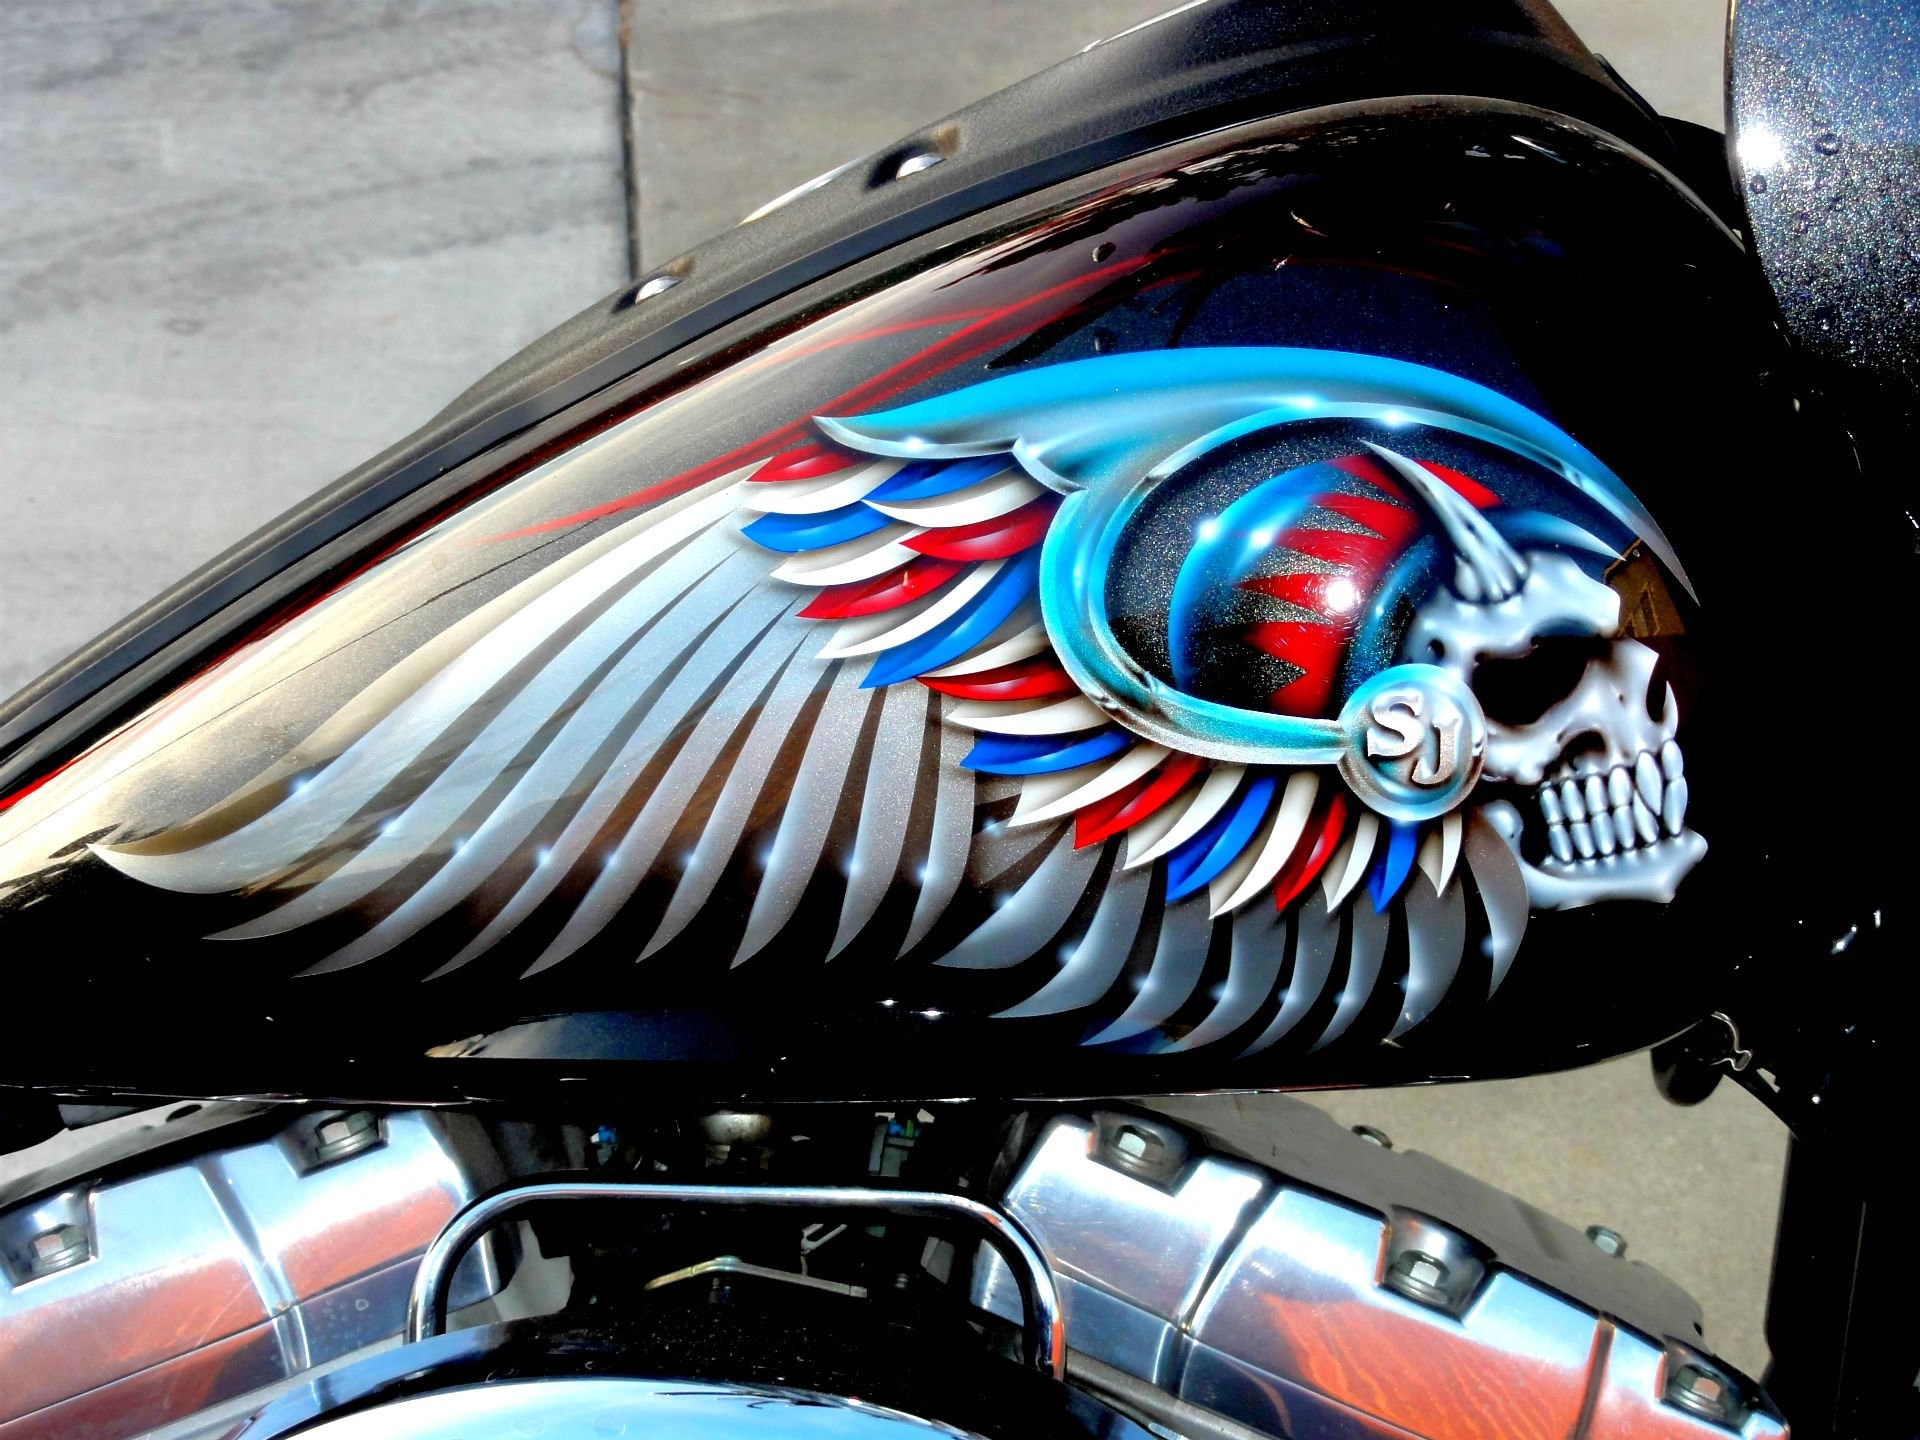 Bike of hell. Ангел на мотоцикле. Роспись бака мотоцикла. Расписанный бак мотоцикл. Мотоцикл с крыльями ангела.